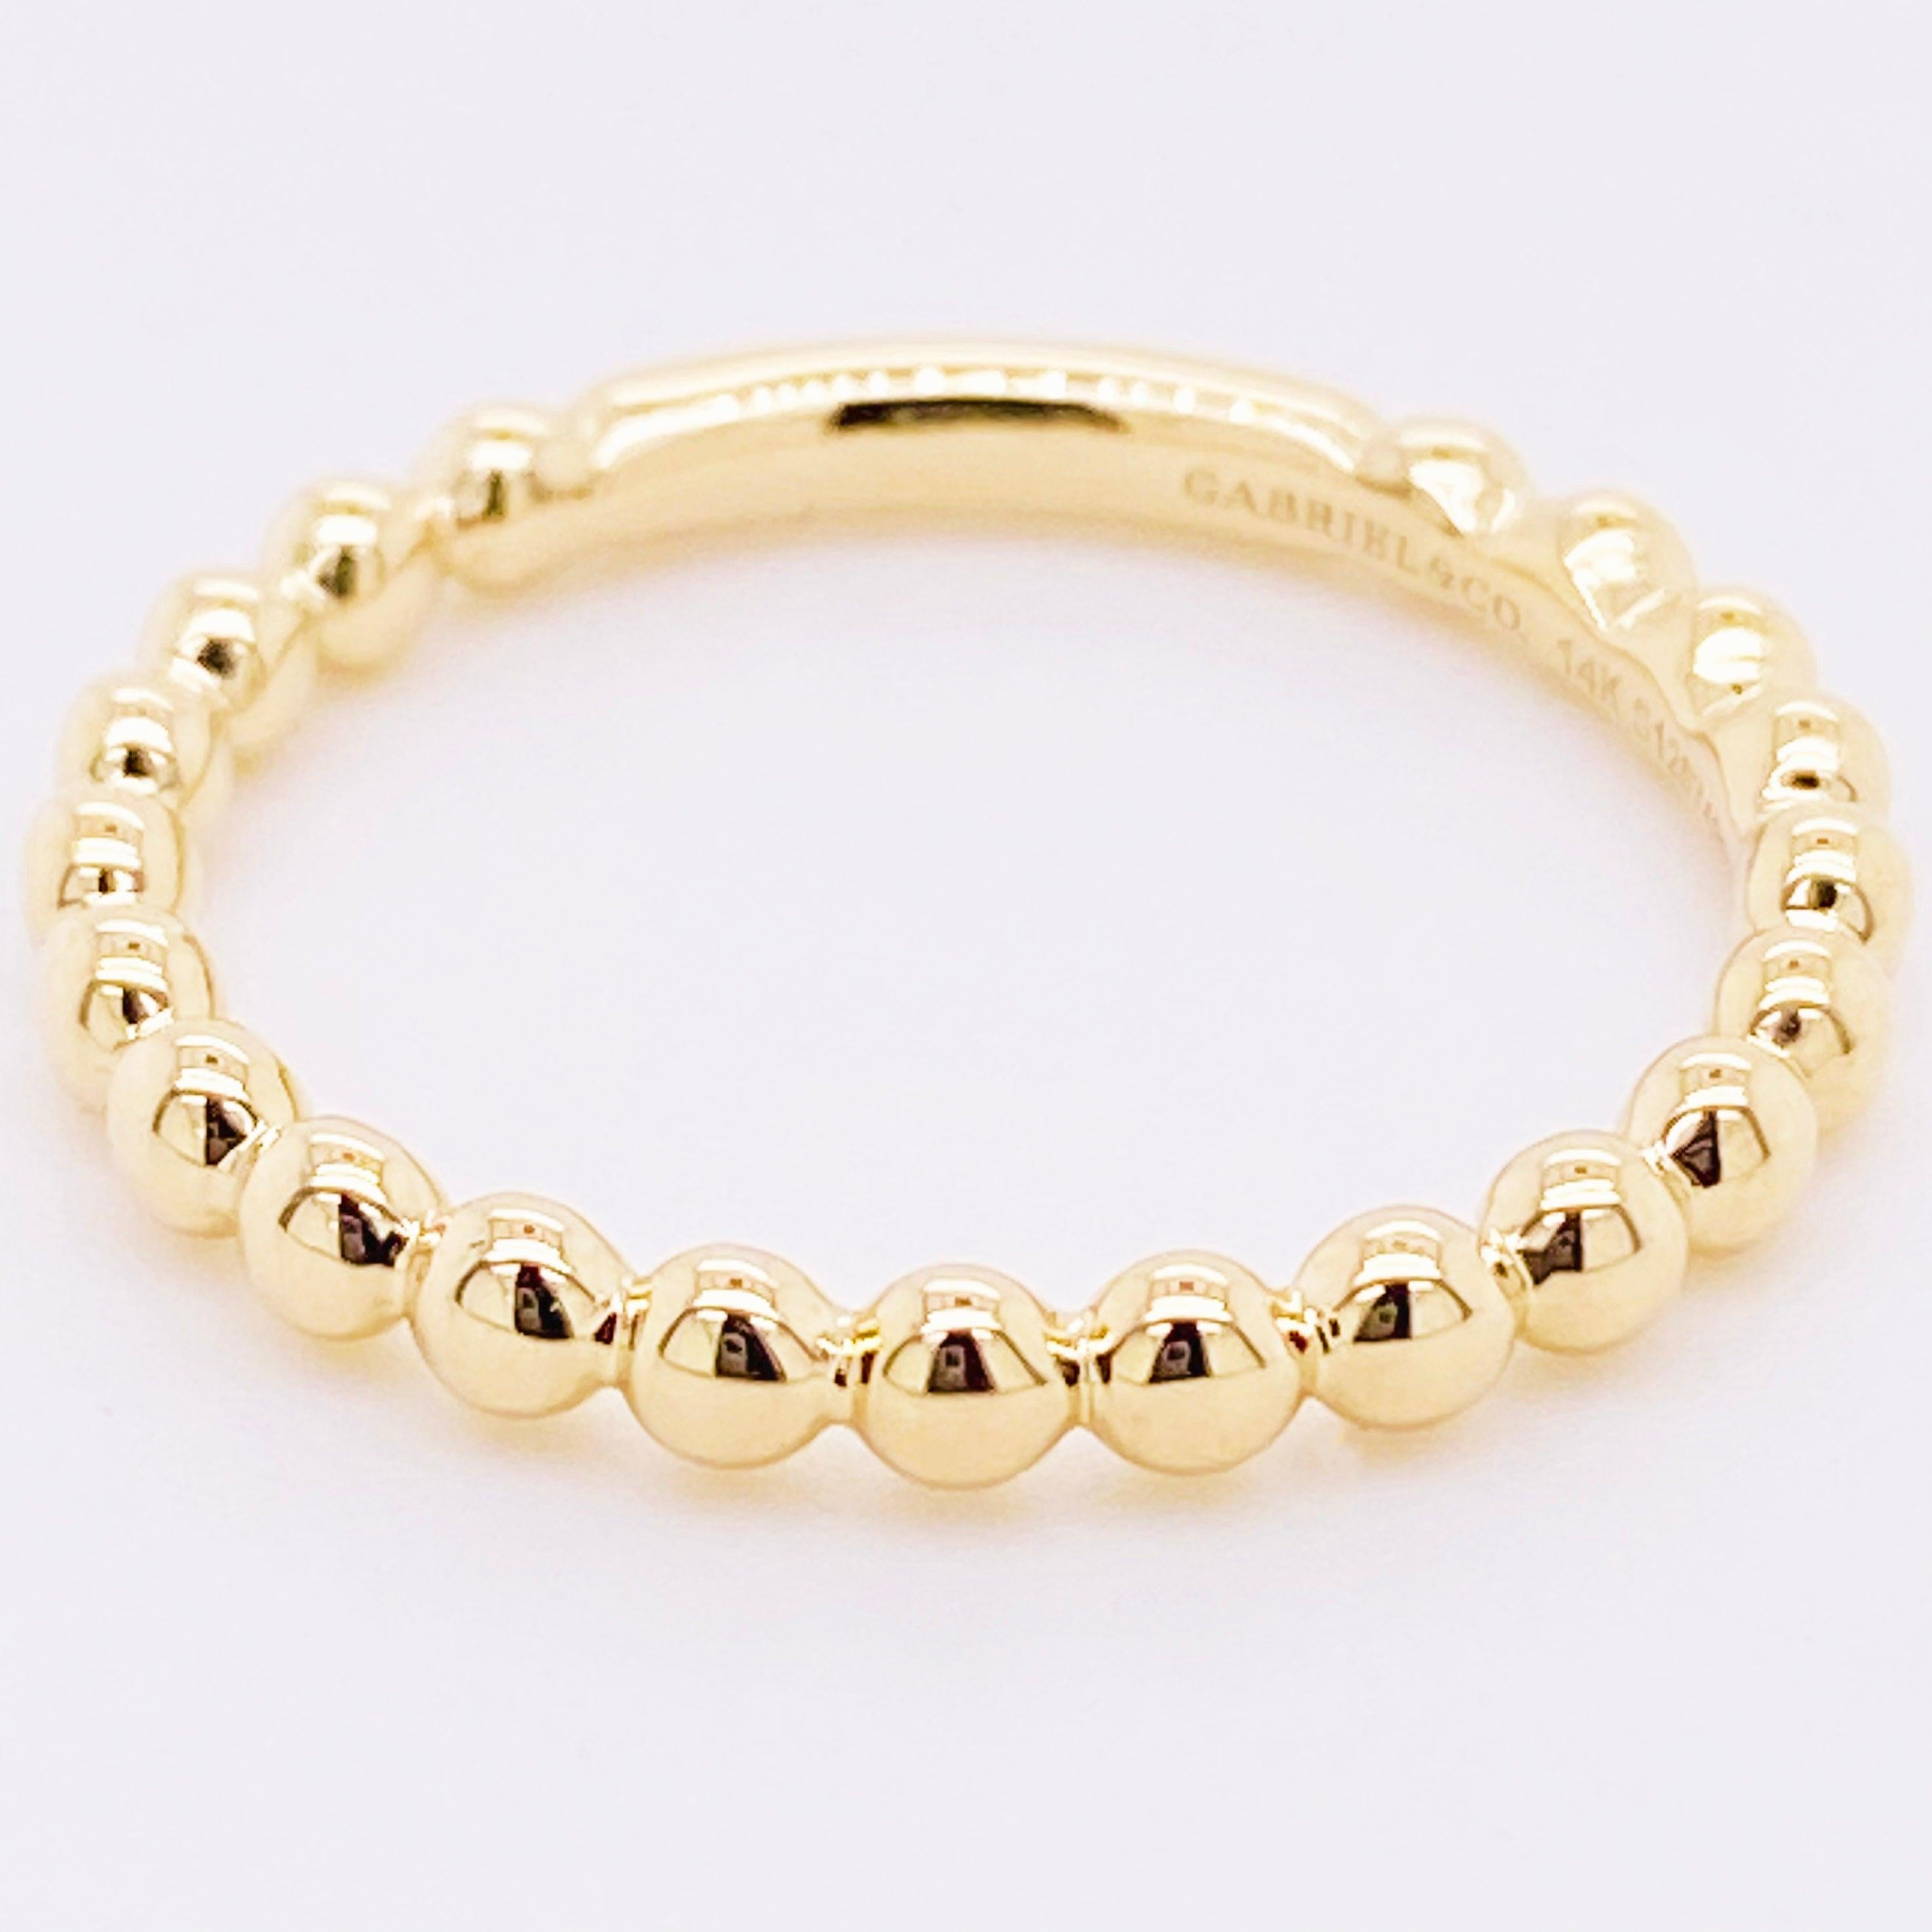 Im Angebot: Goldperlenring, 14 Karat Gelbgold Perlenring, stapelbarer Ring, 2021 Echt () 3